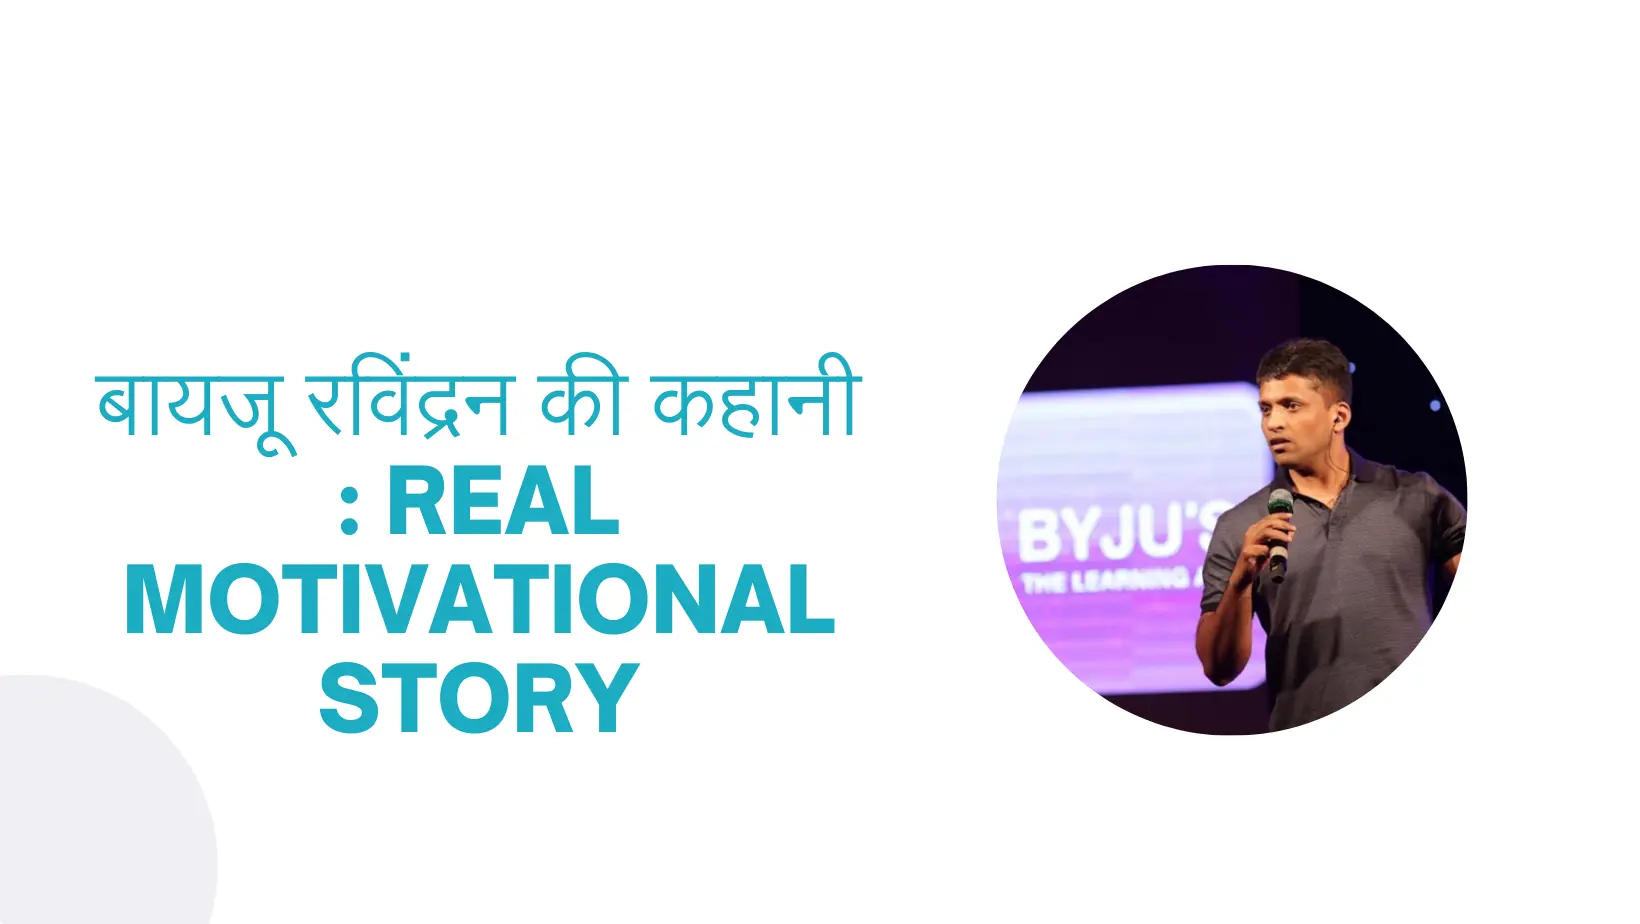 बायजू रविंद्रन की कहानी : Real Motivational Story